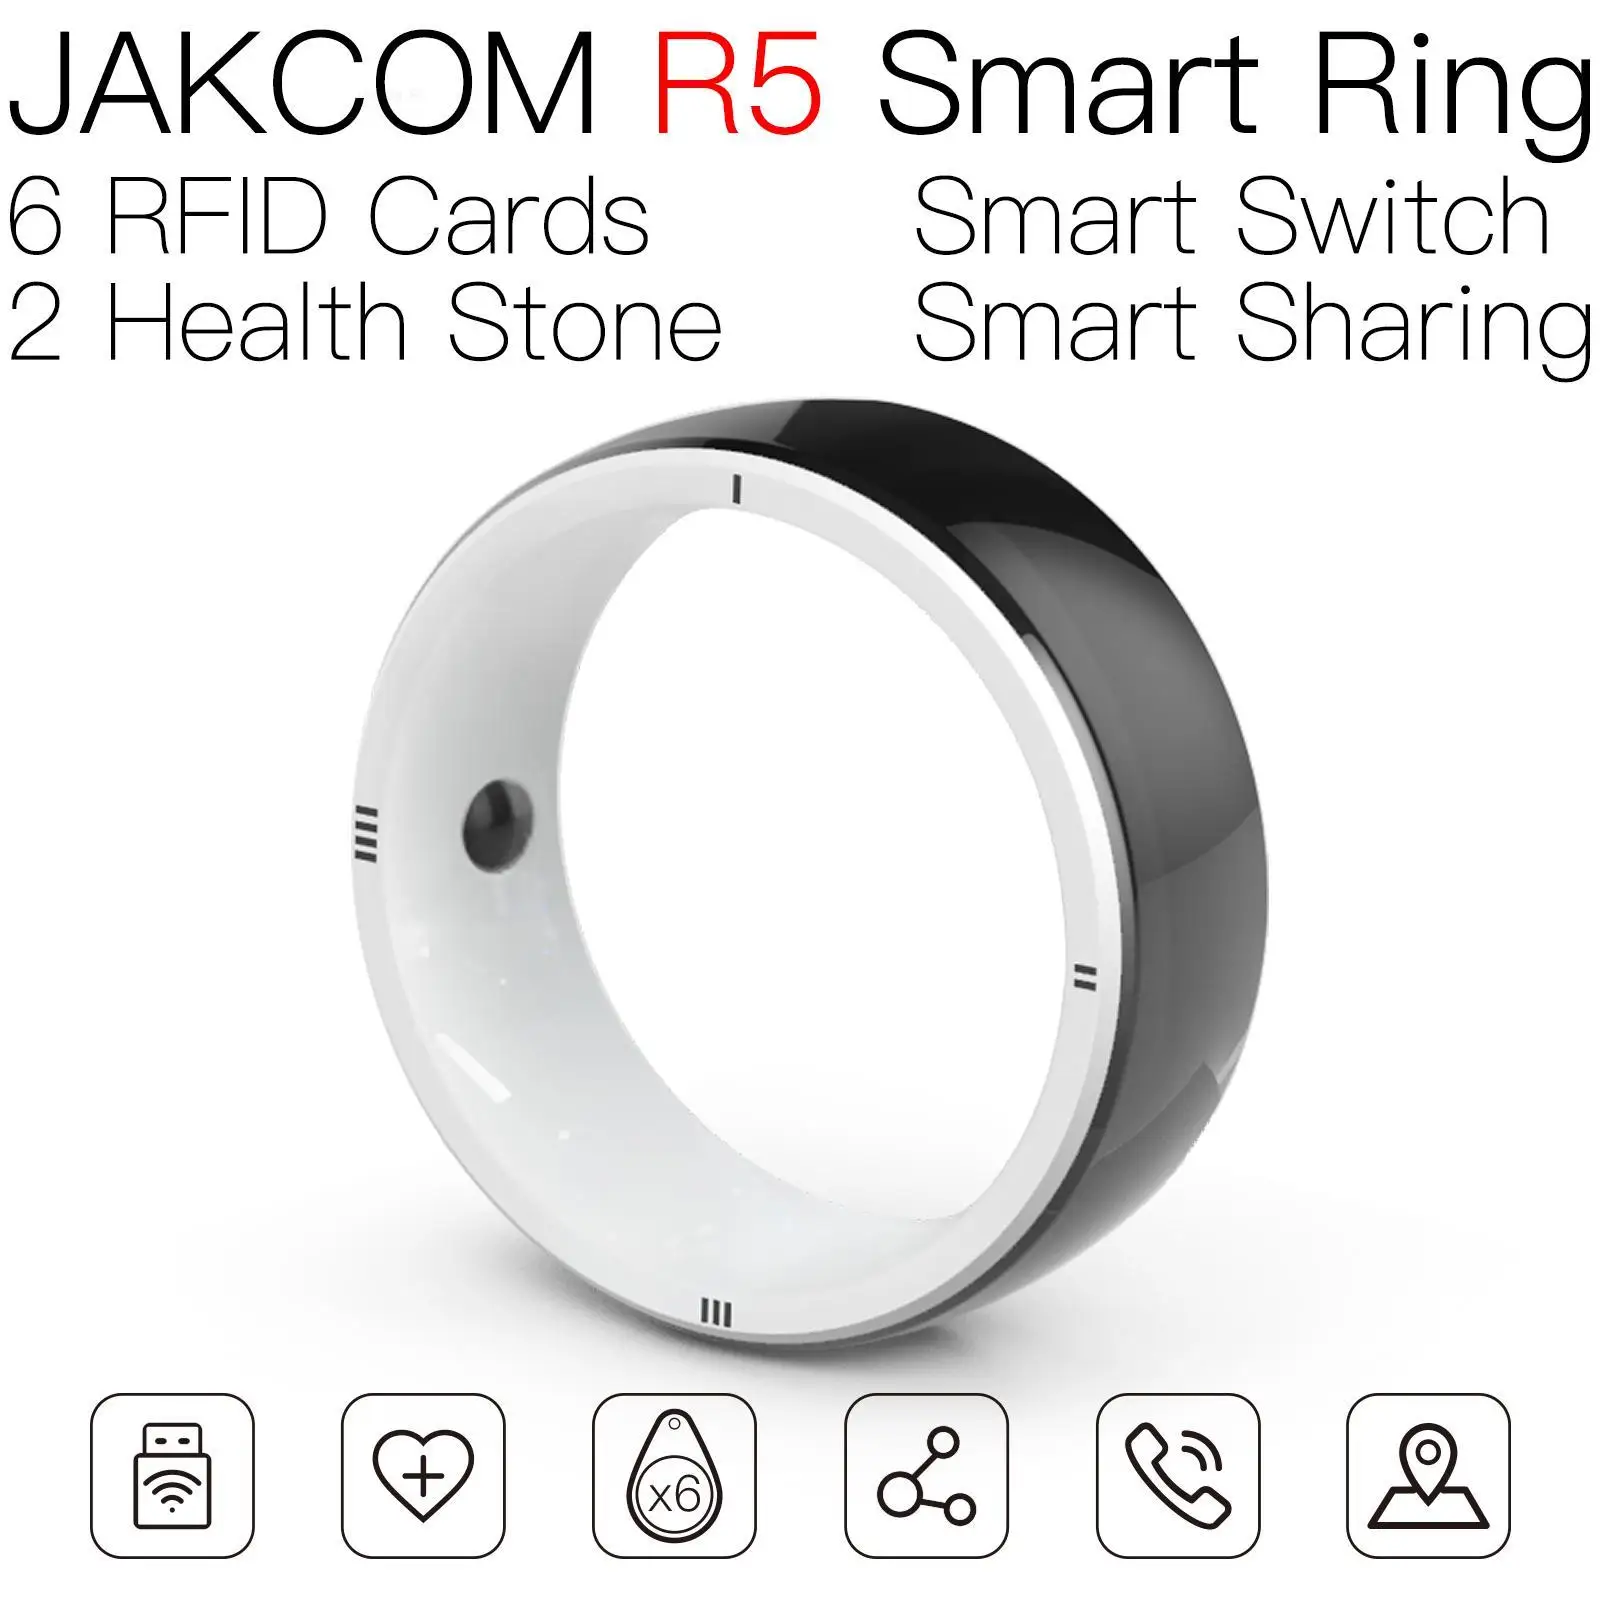 

JAKCOM R5 Smart Ring Super value than ics chip adhesive hacking rfid card vet pet micro rfd nfc uhf passive tags vehiculo